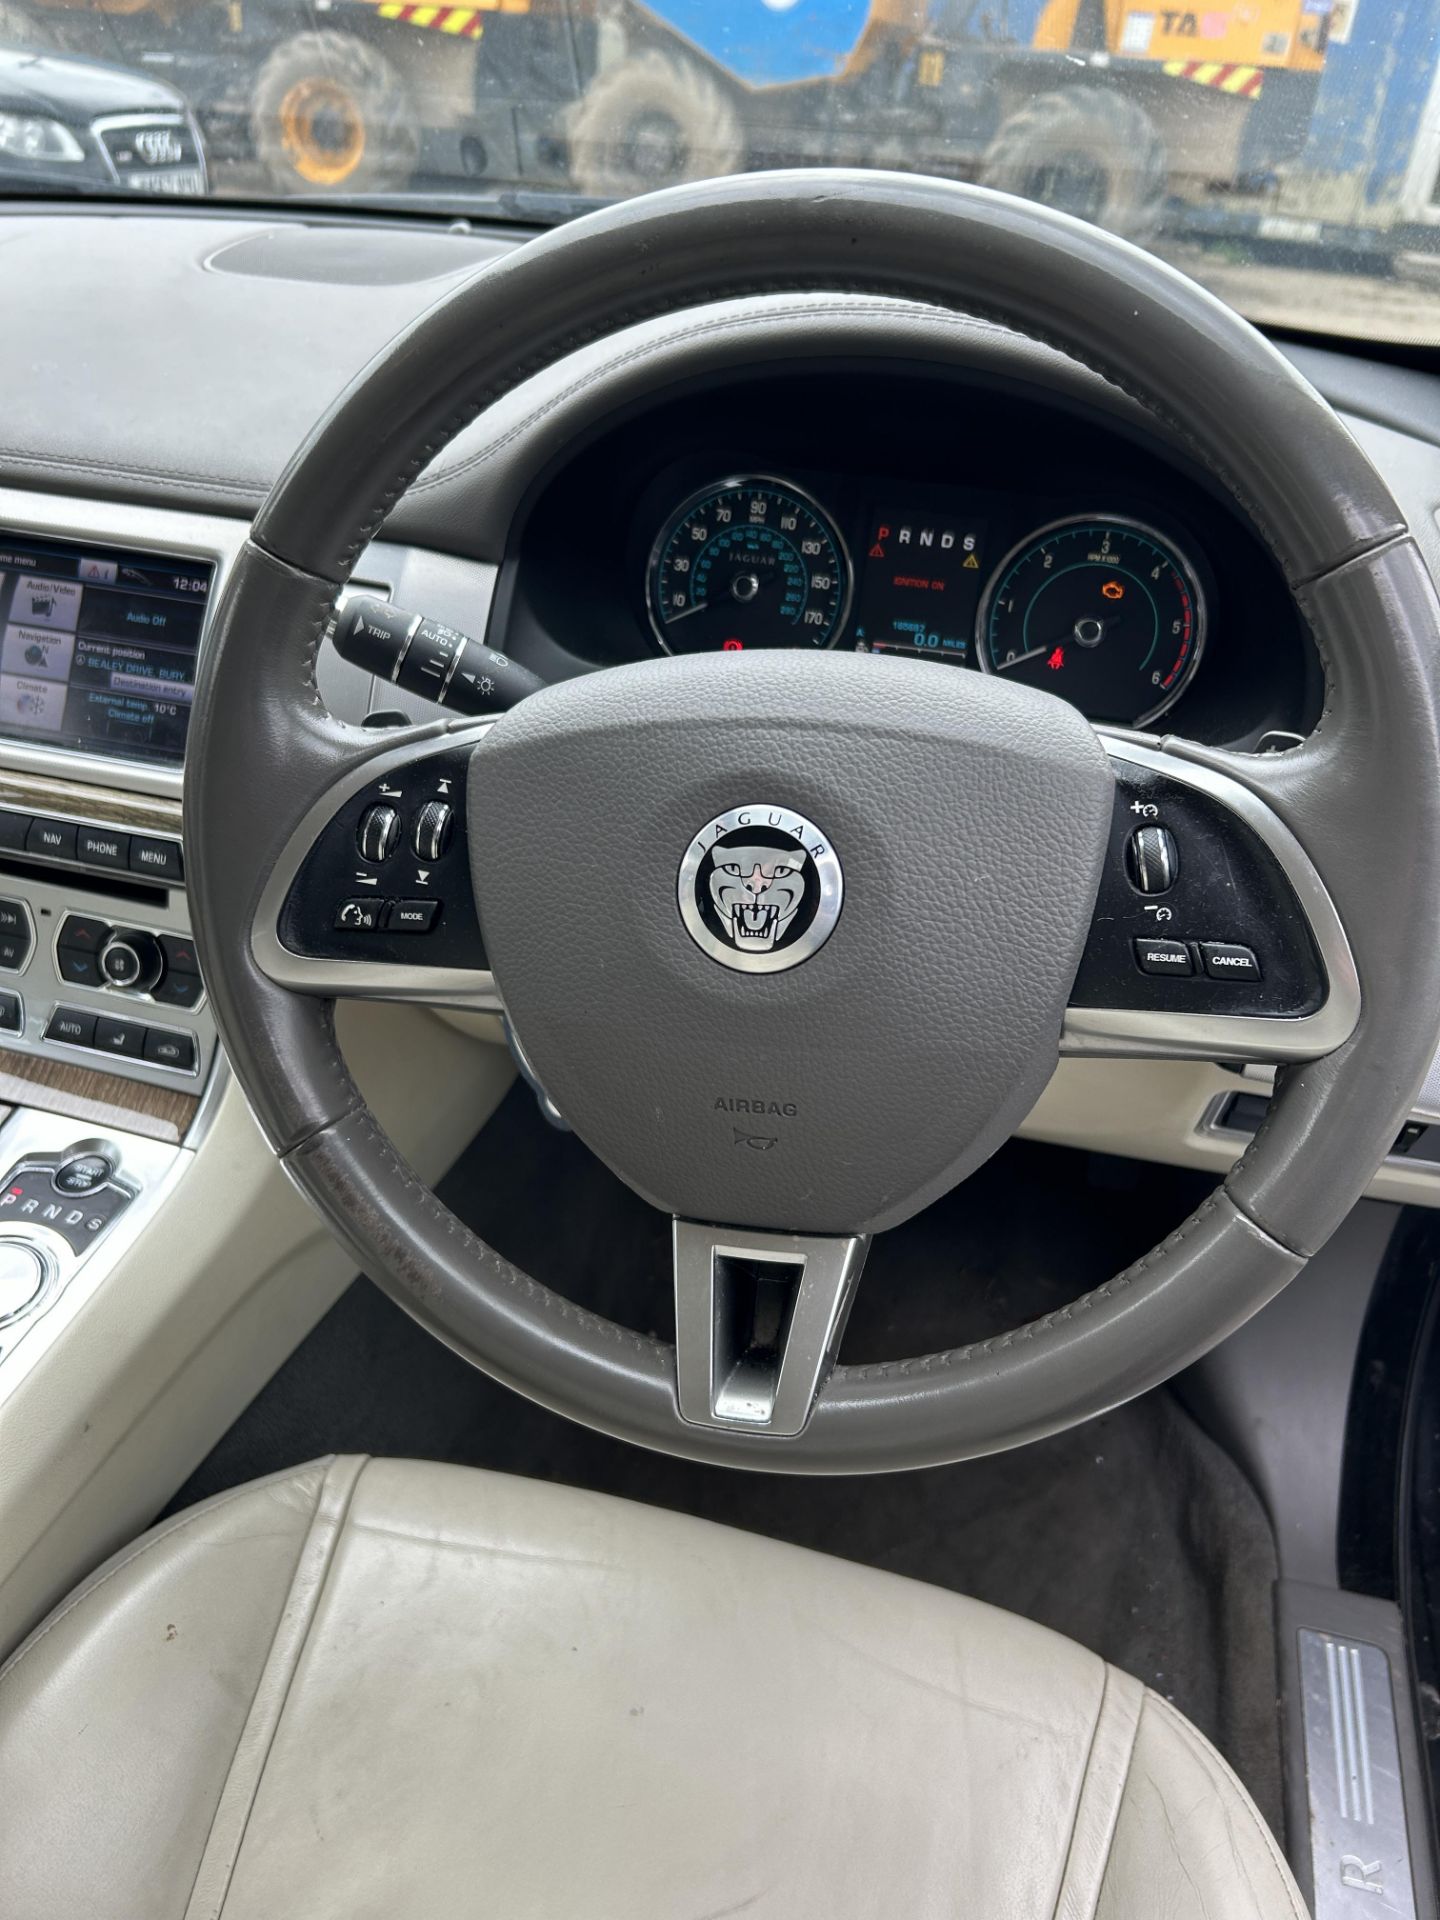 Jaguar XF Premium Luxury D Auto Diesel 4 Door Saloon | PO13 TOH | 165,697 Miles - Image 8 of 9